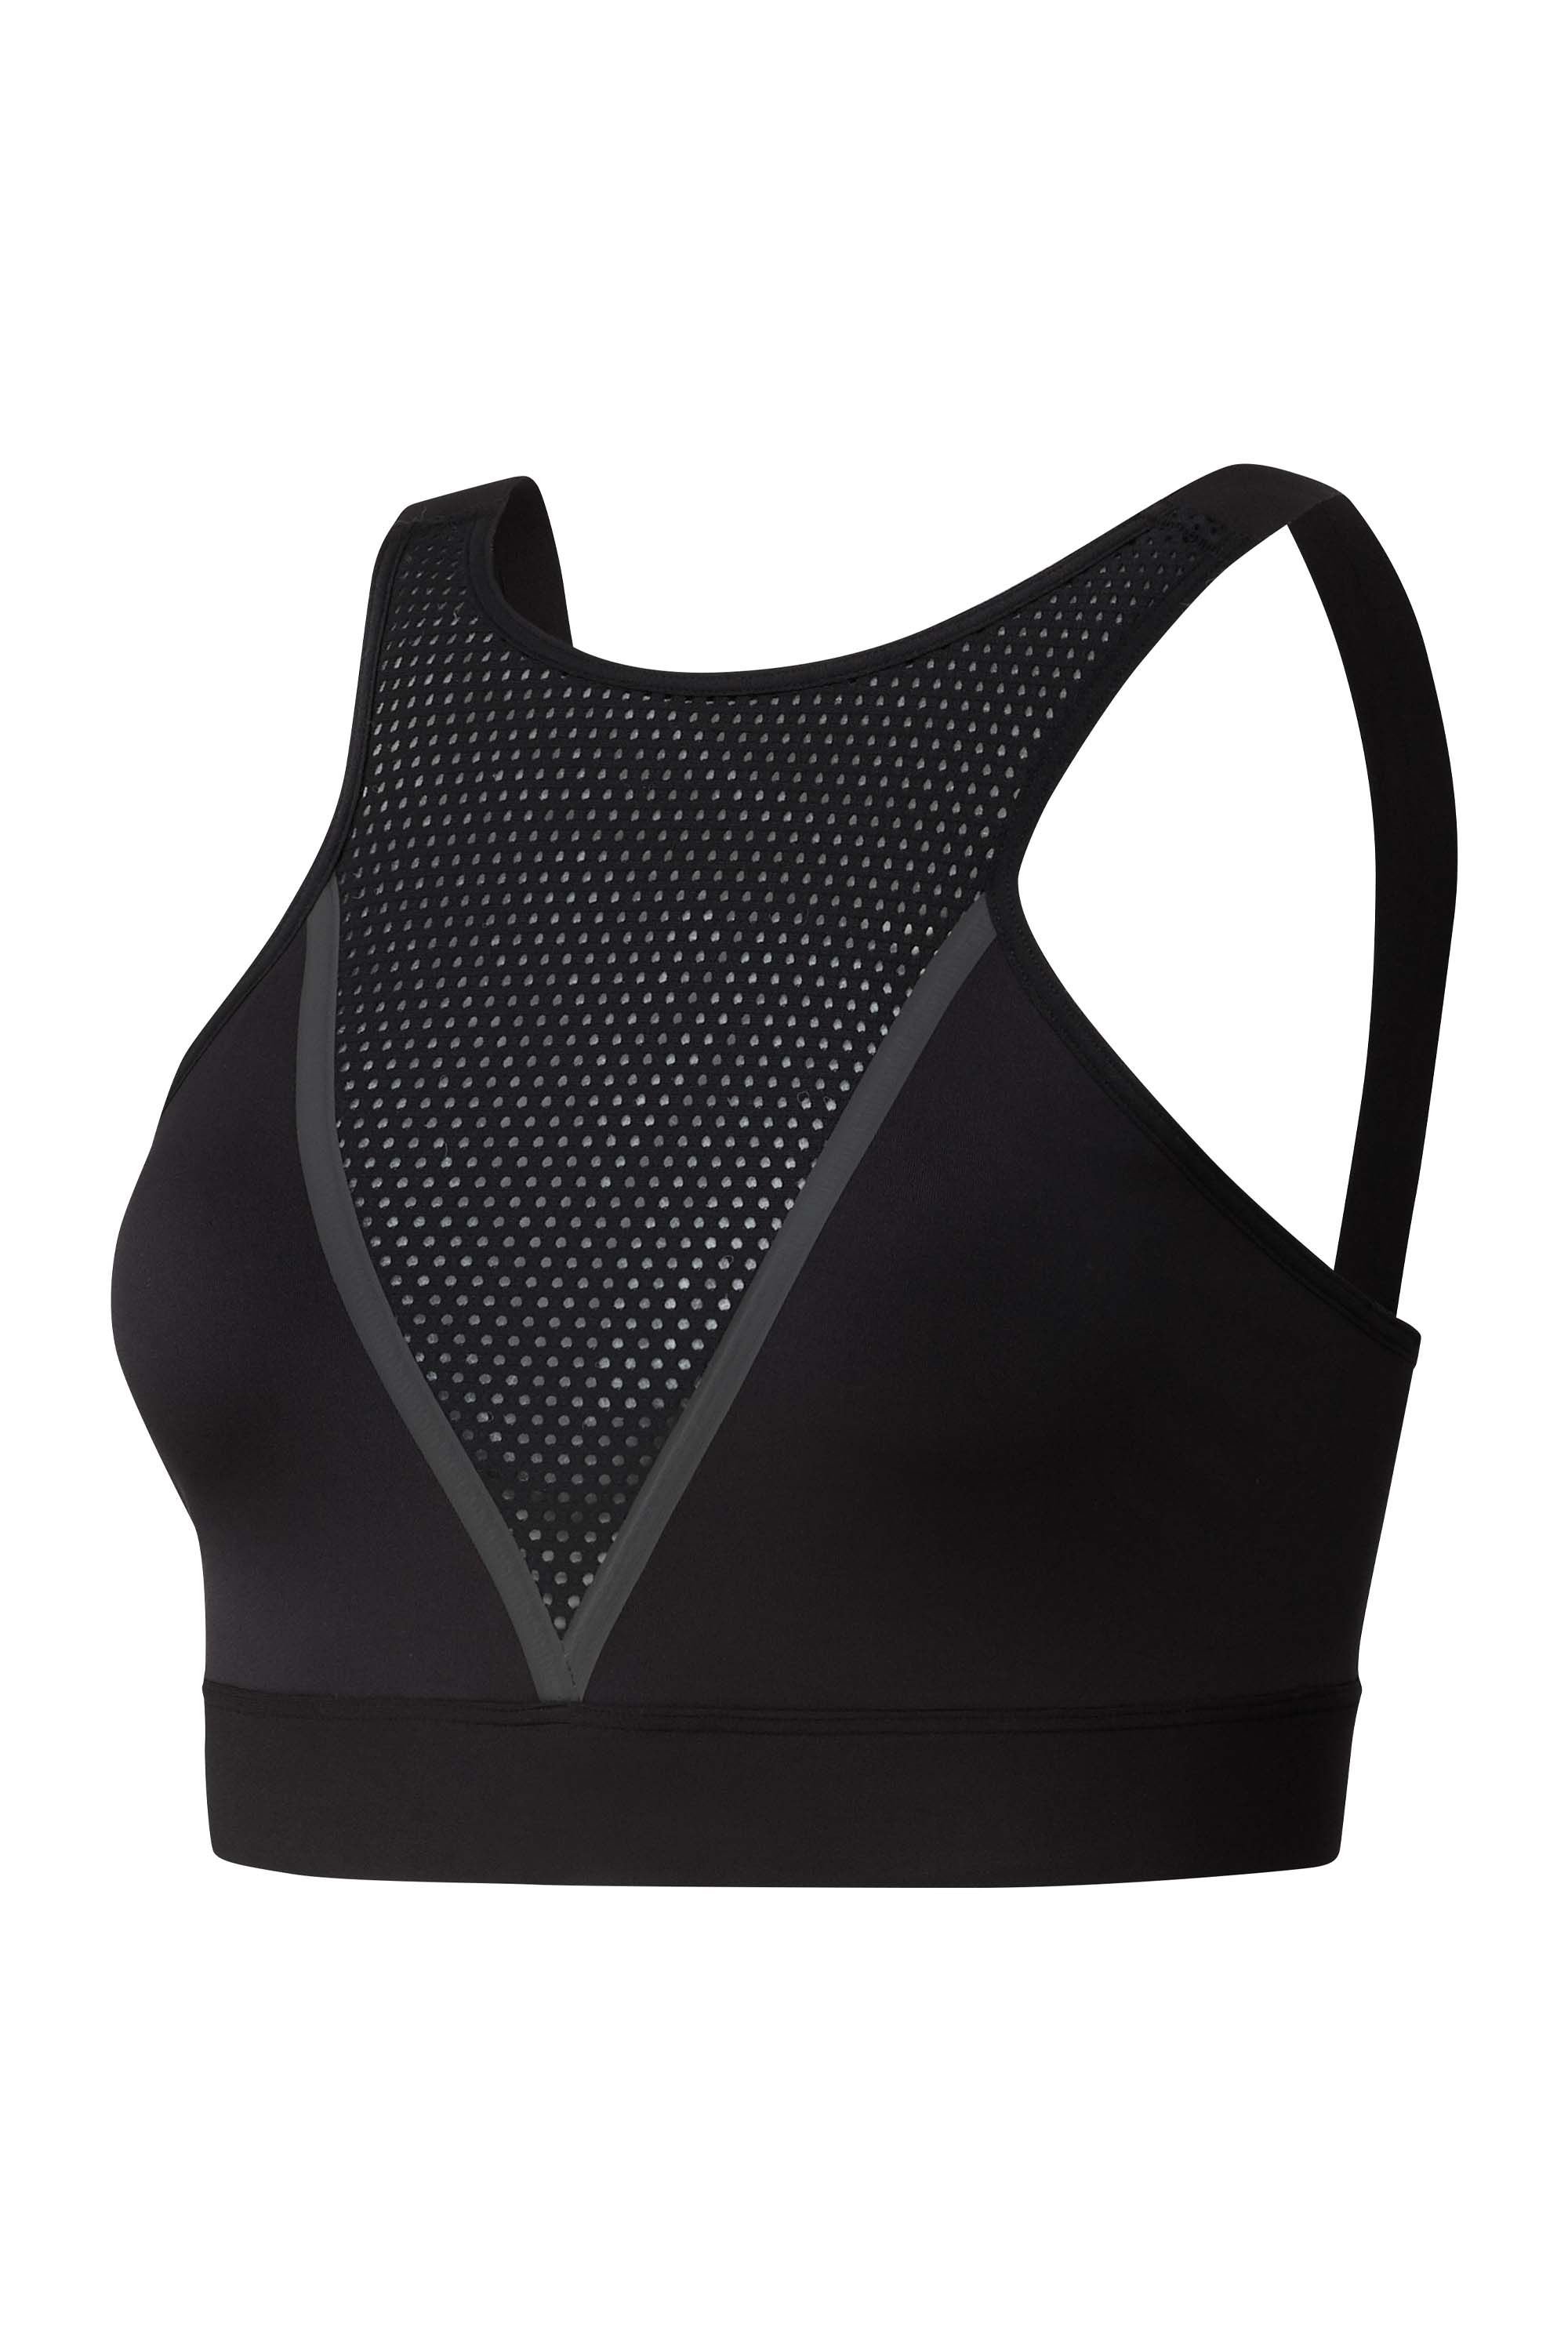 Karlie Kloss models Nike's new super sports bra - Telegraph